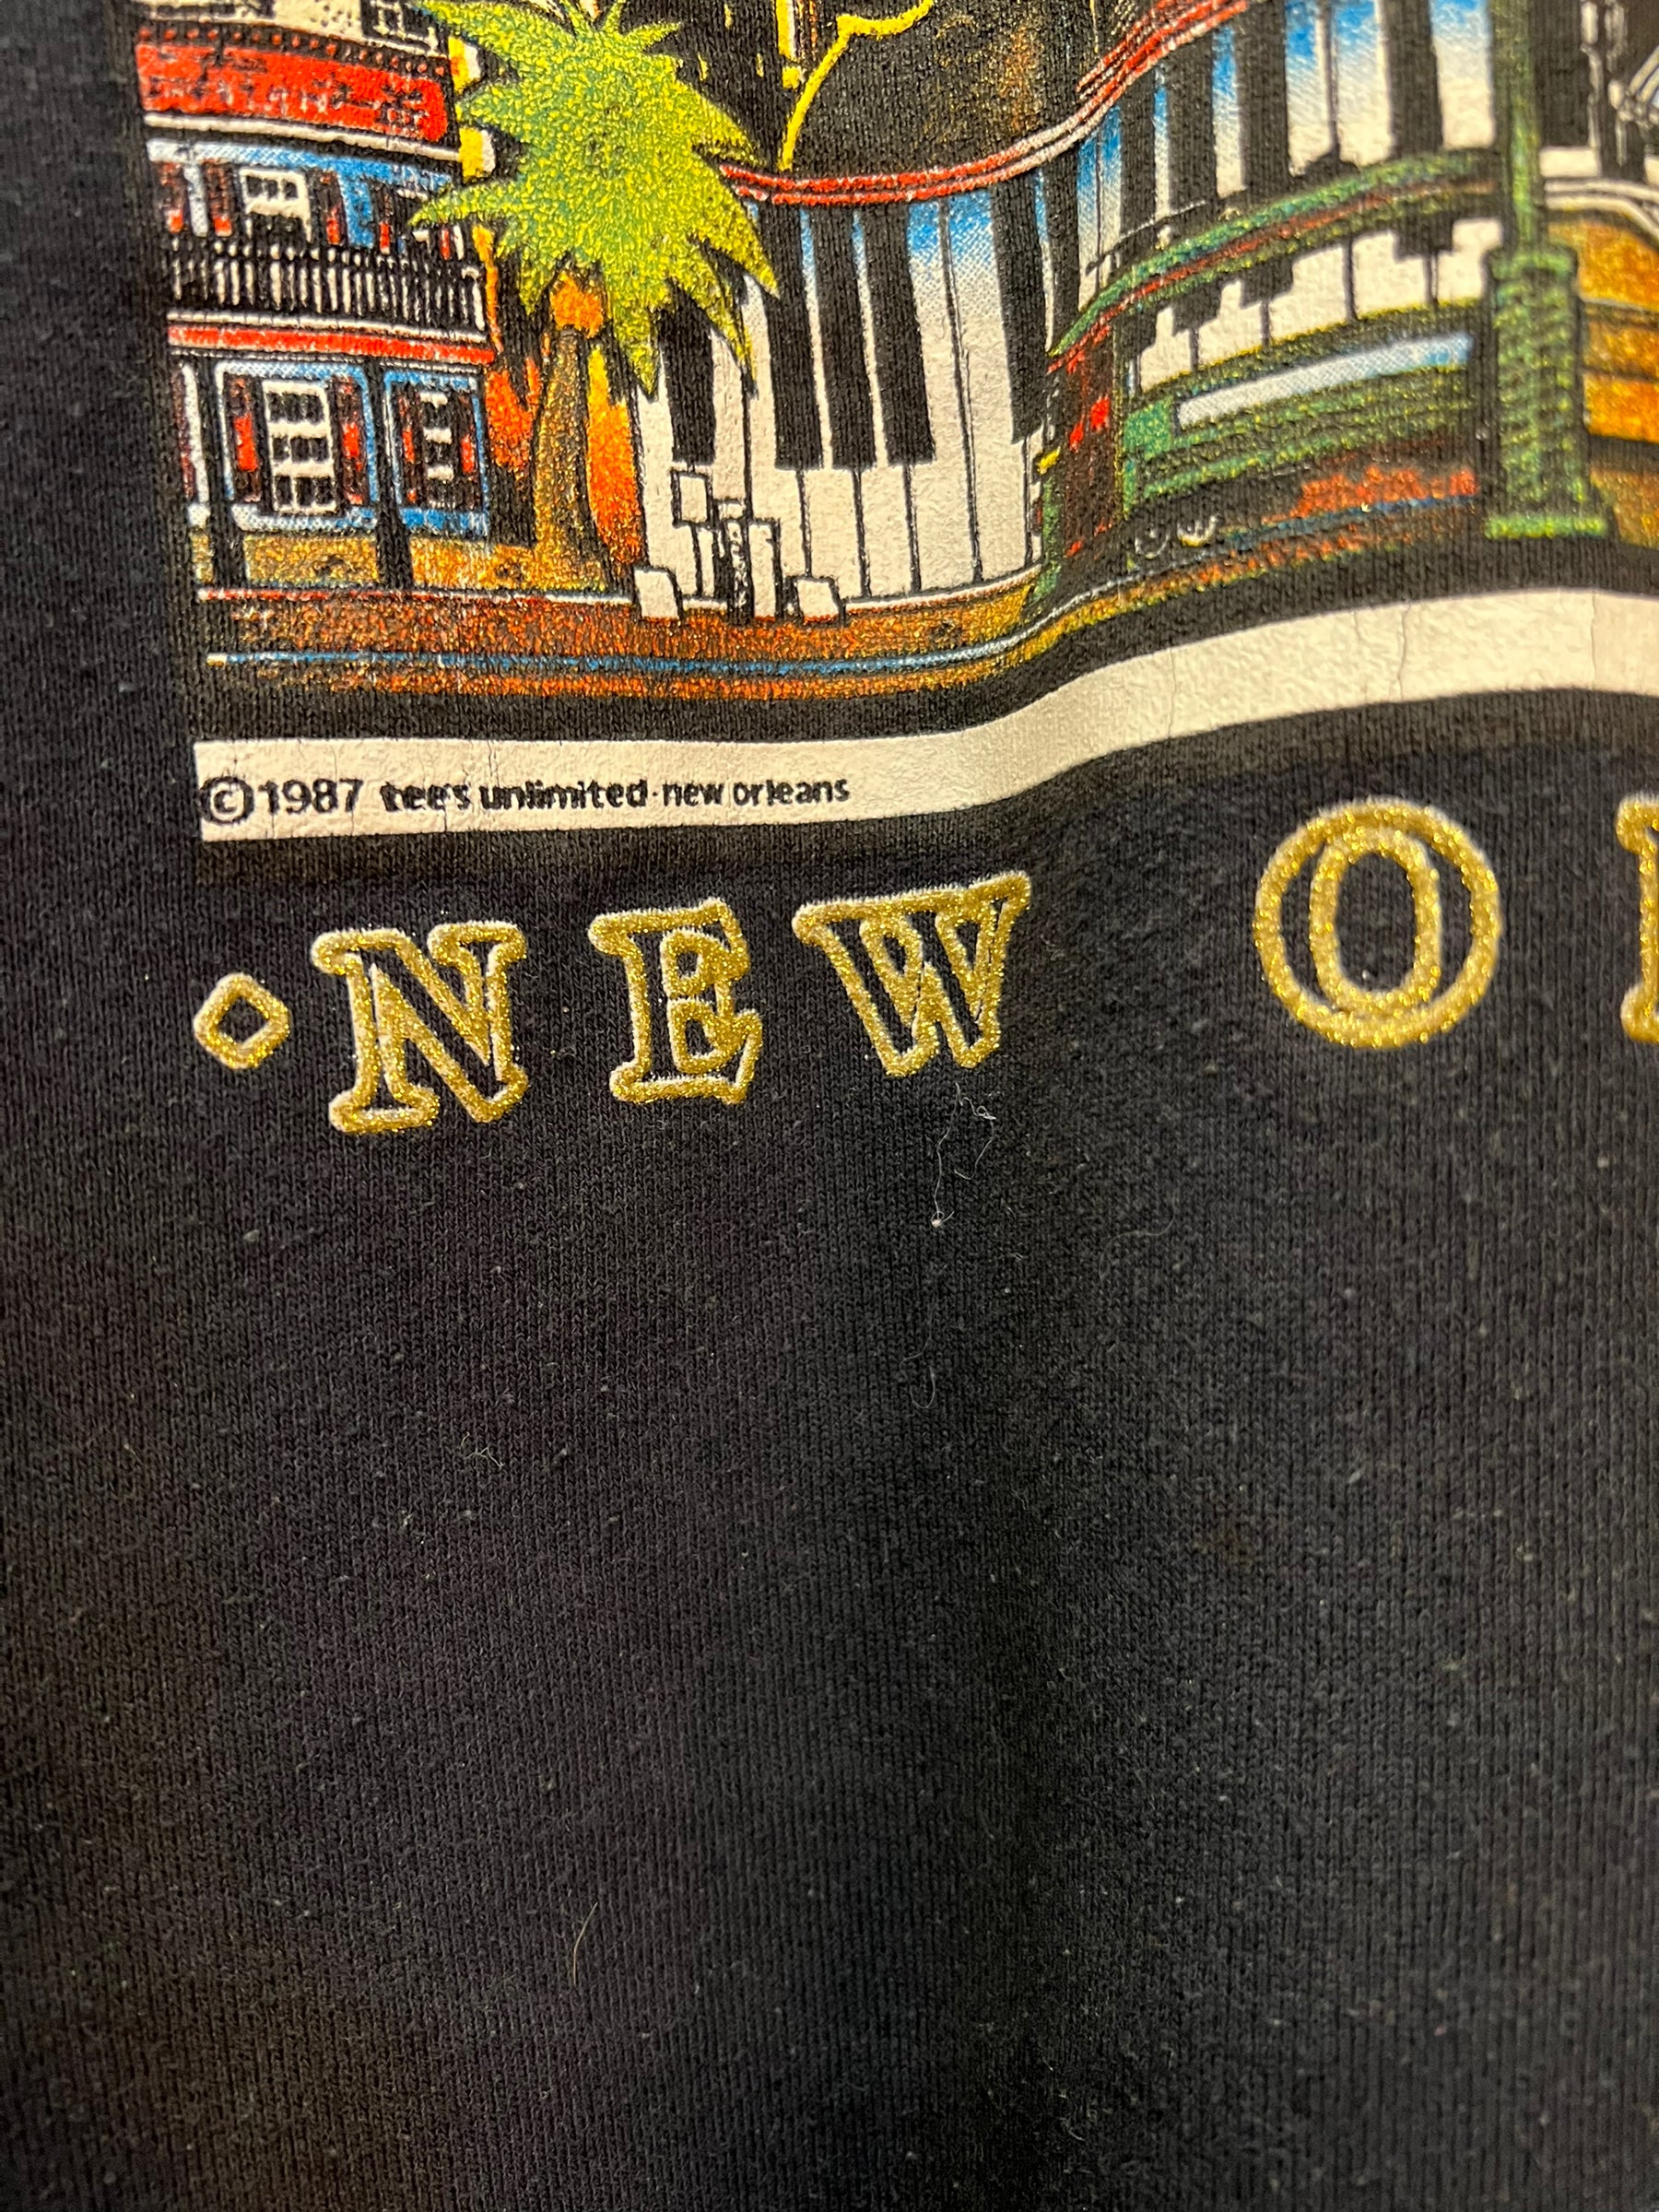 City of Jazz New Orleans sweatshirt